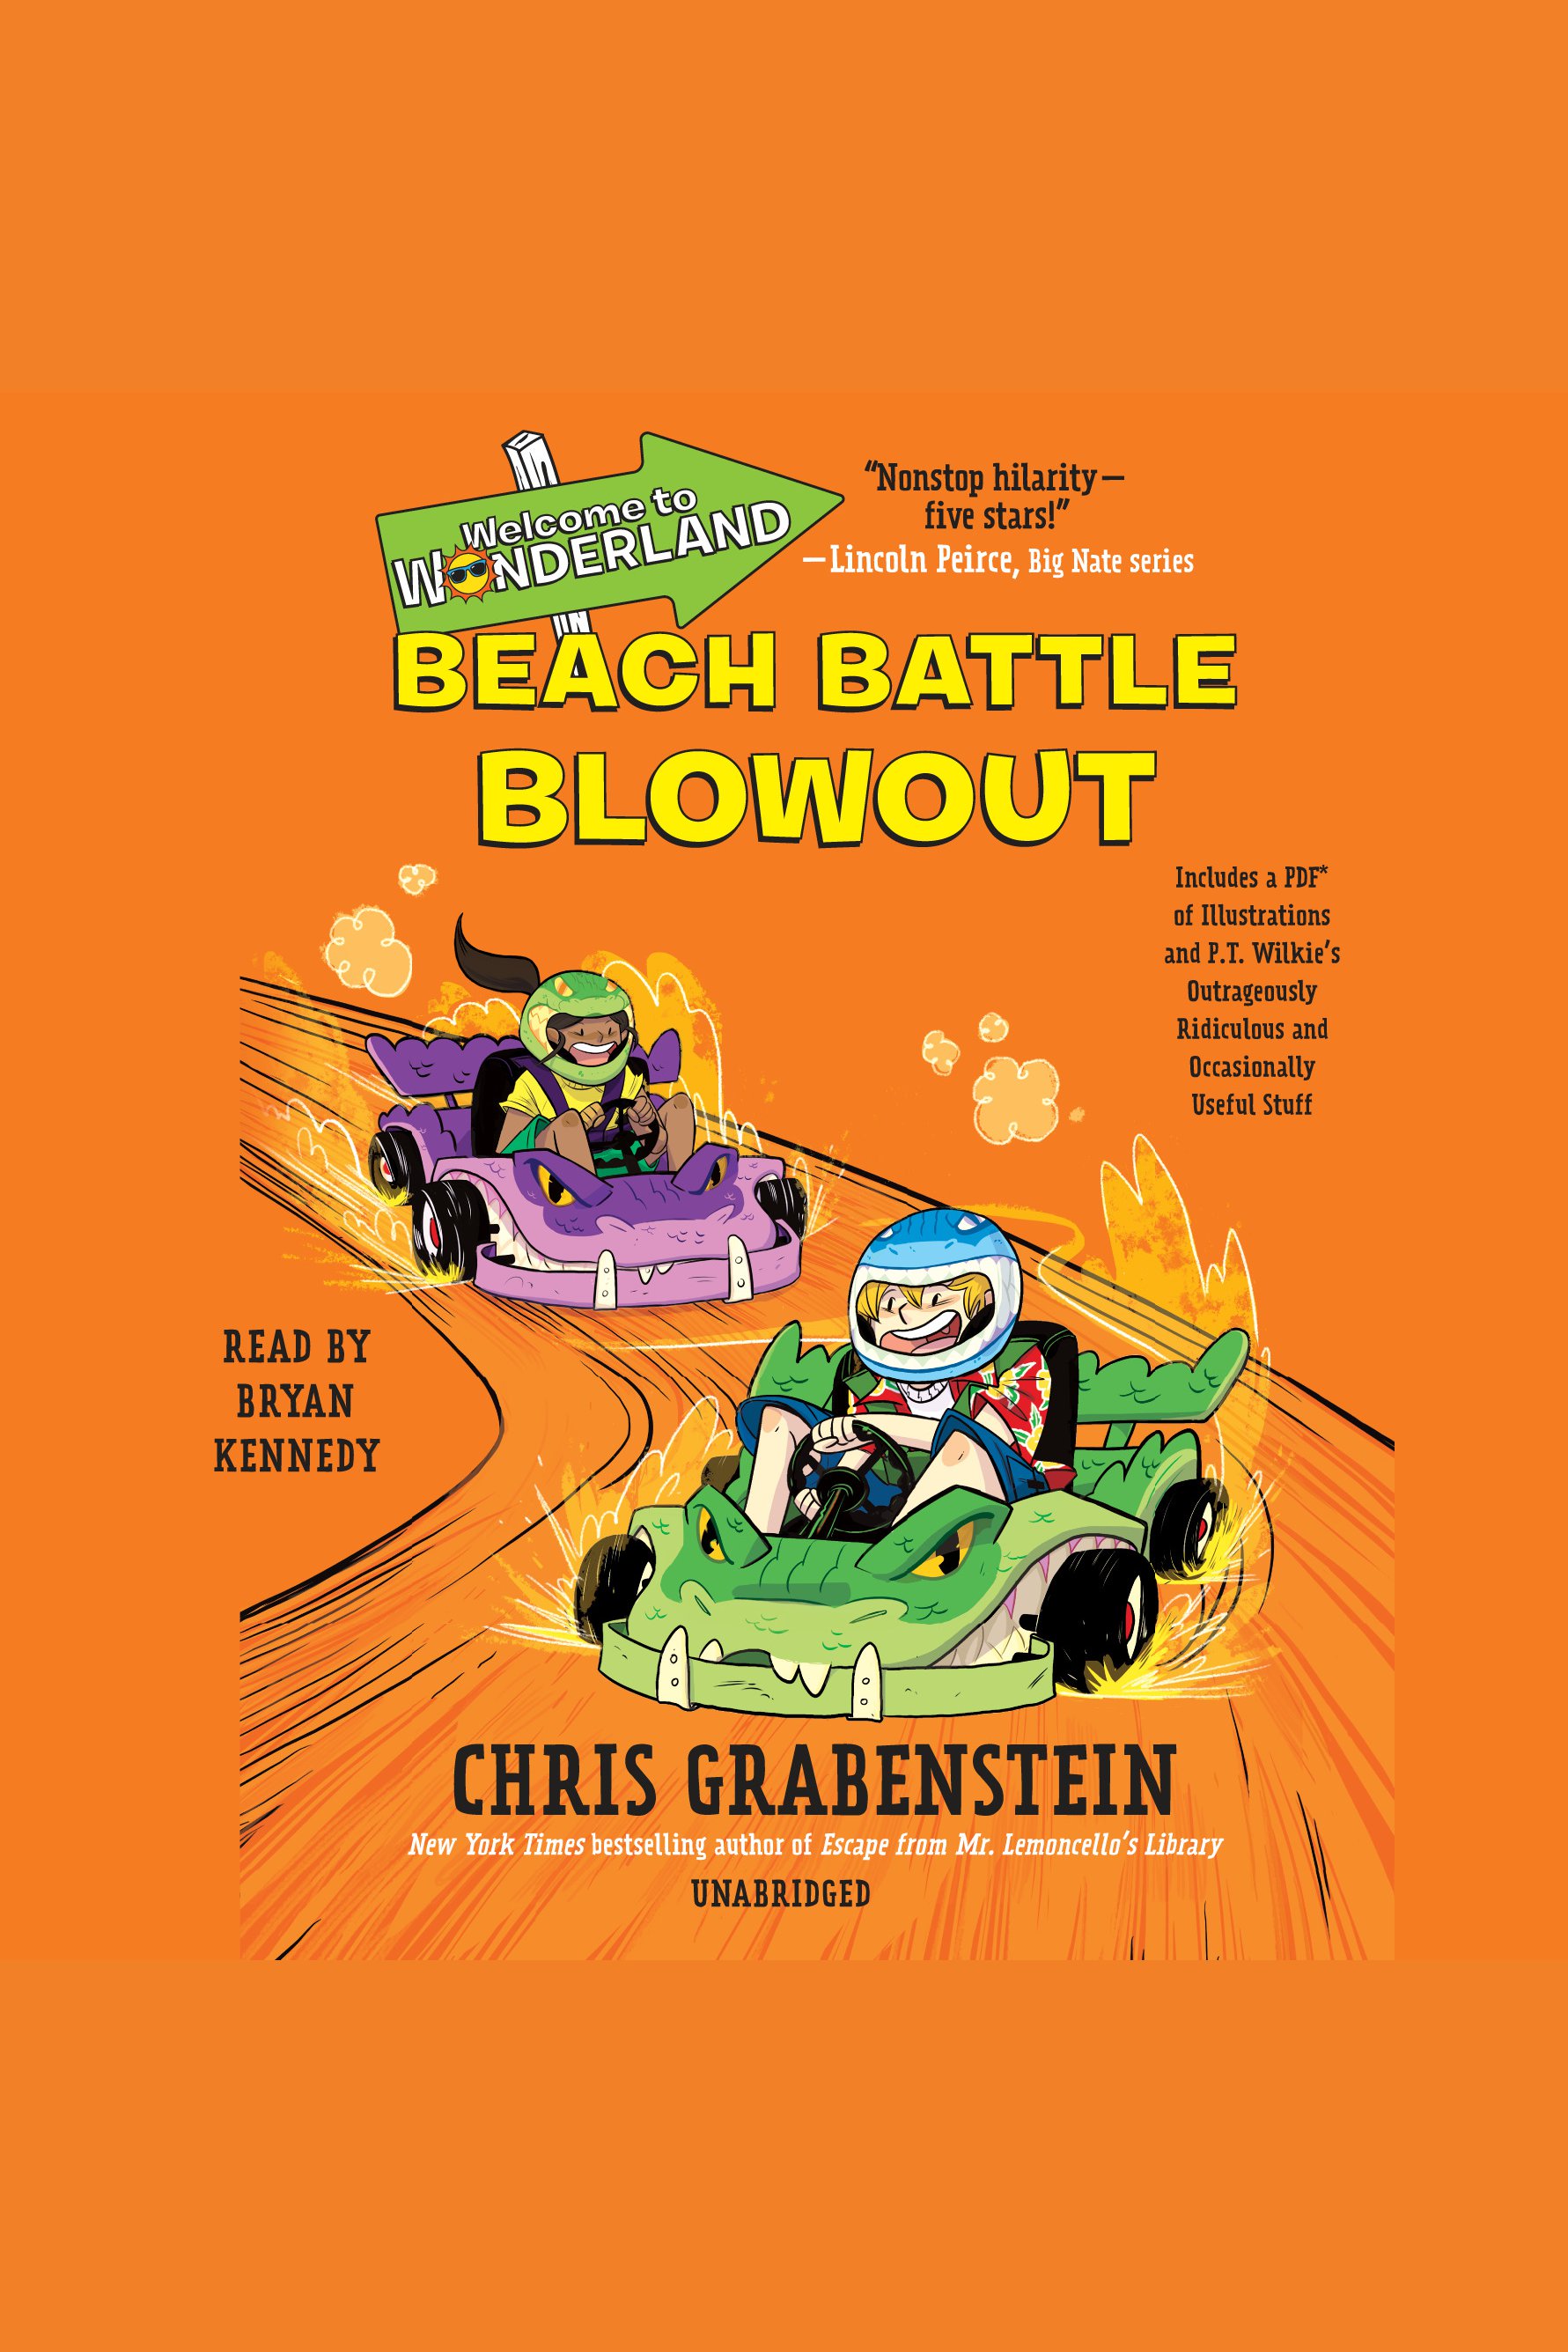 Beach battle blowout. Book 4 cover image